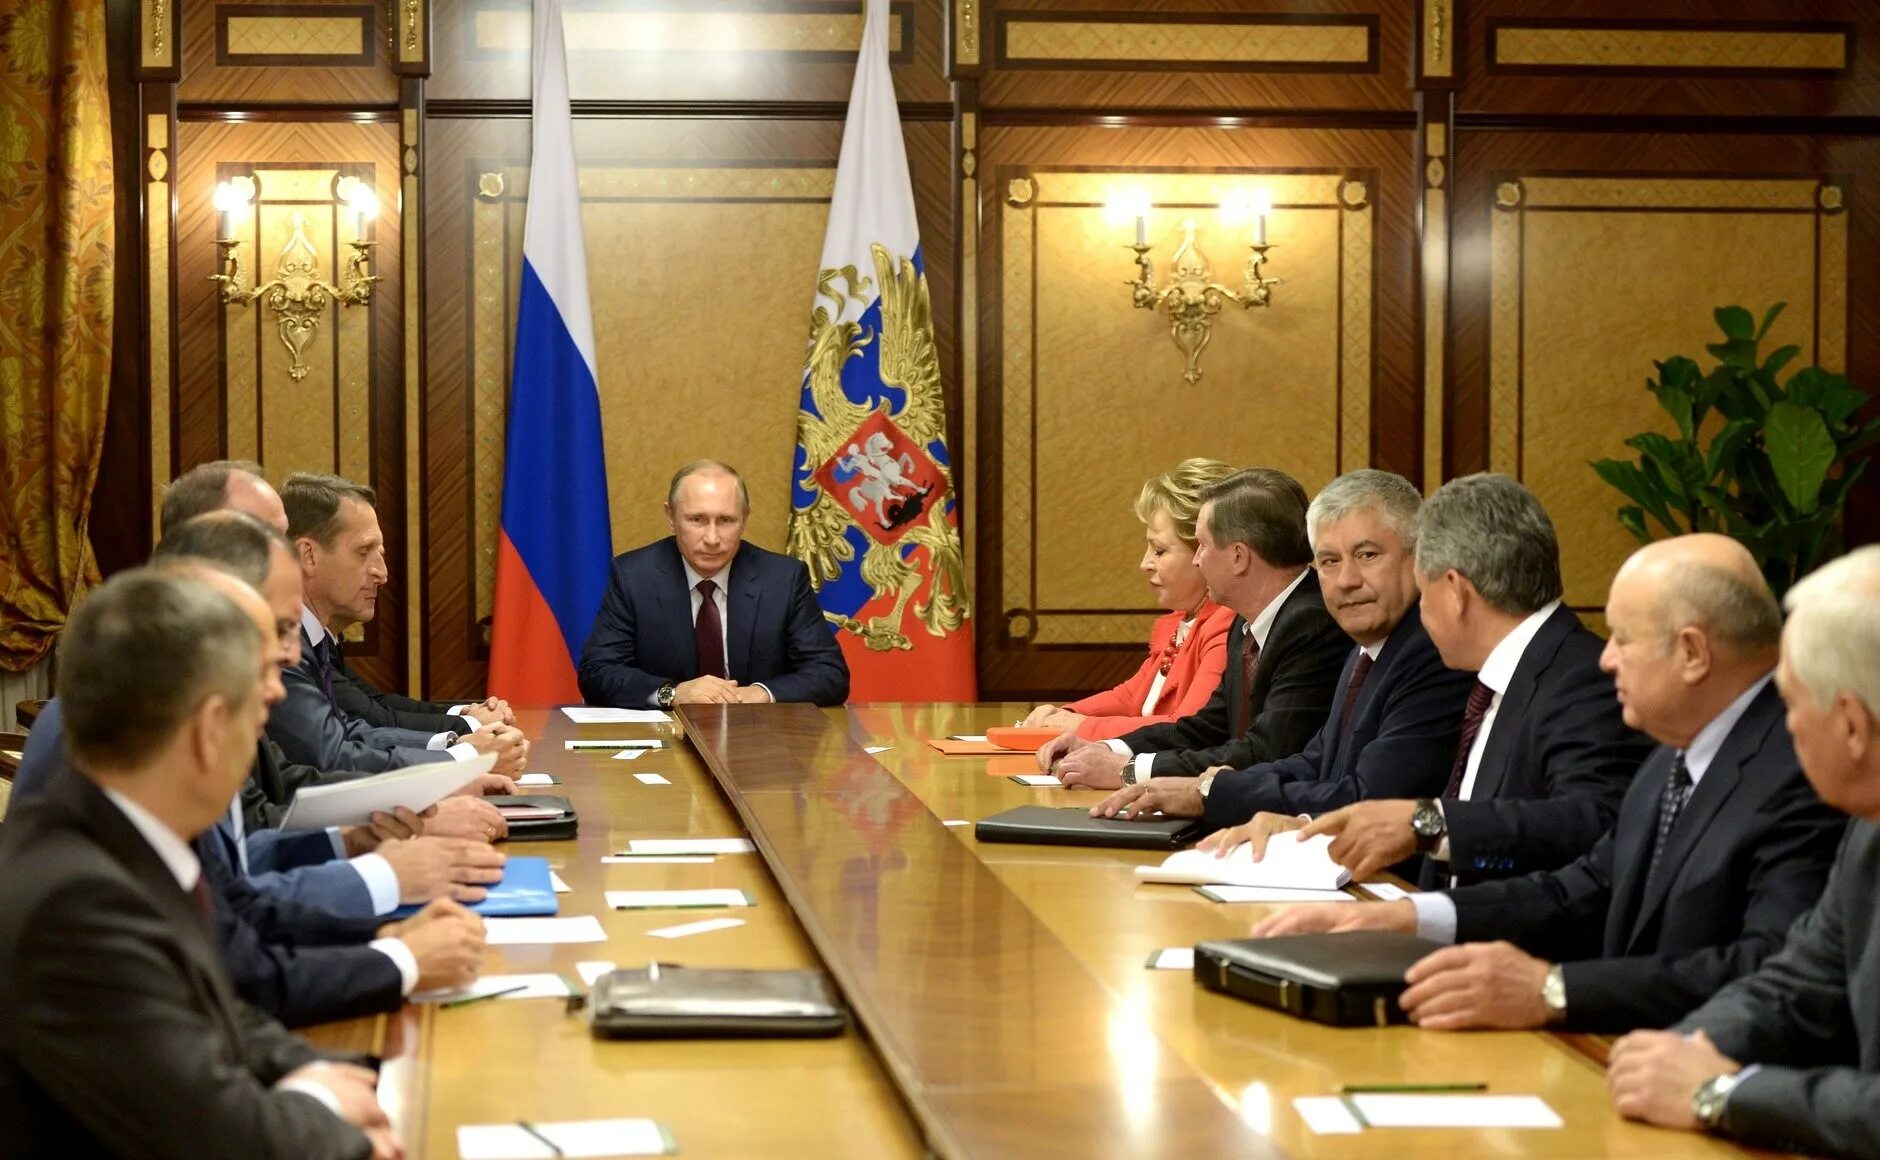 Сайт совета безопасности. Заседание совета безопасности. Совет безопасности РФ. Заседание Совбеза.